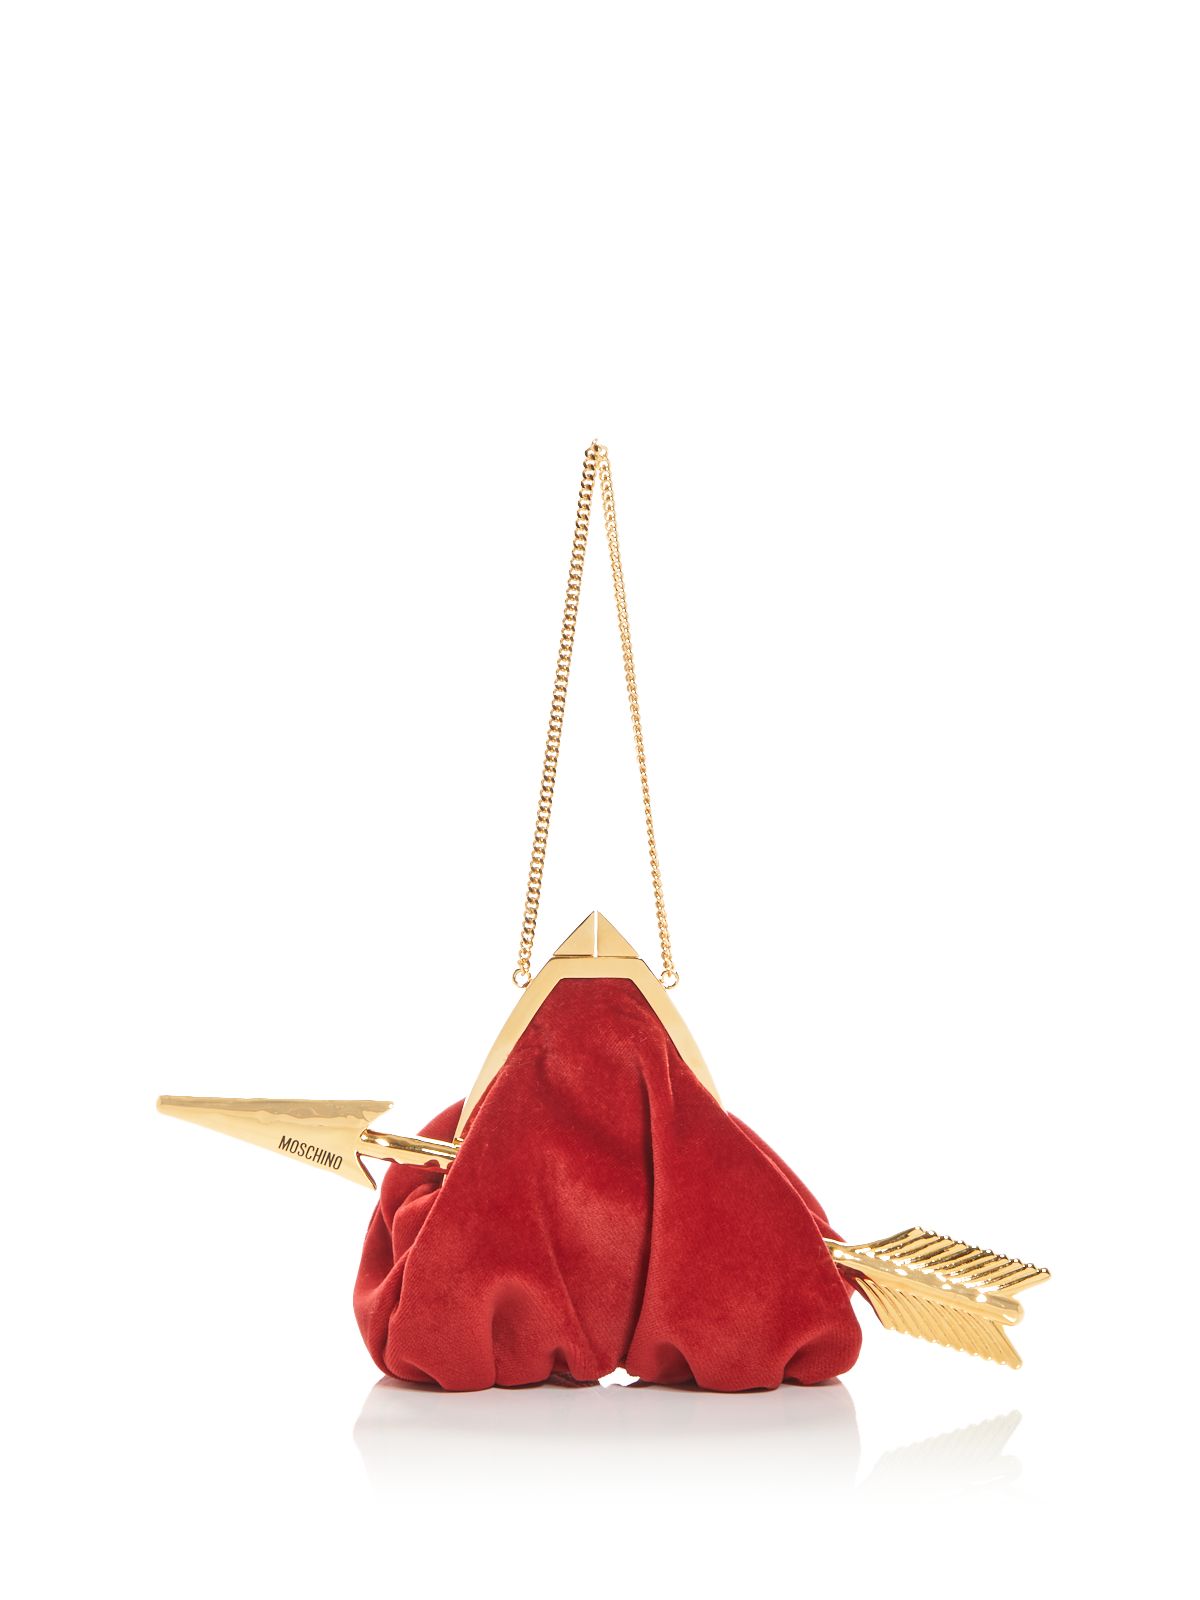 MOSCHINO Women's Red Solid Single Strap Clutch Handbag Purse